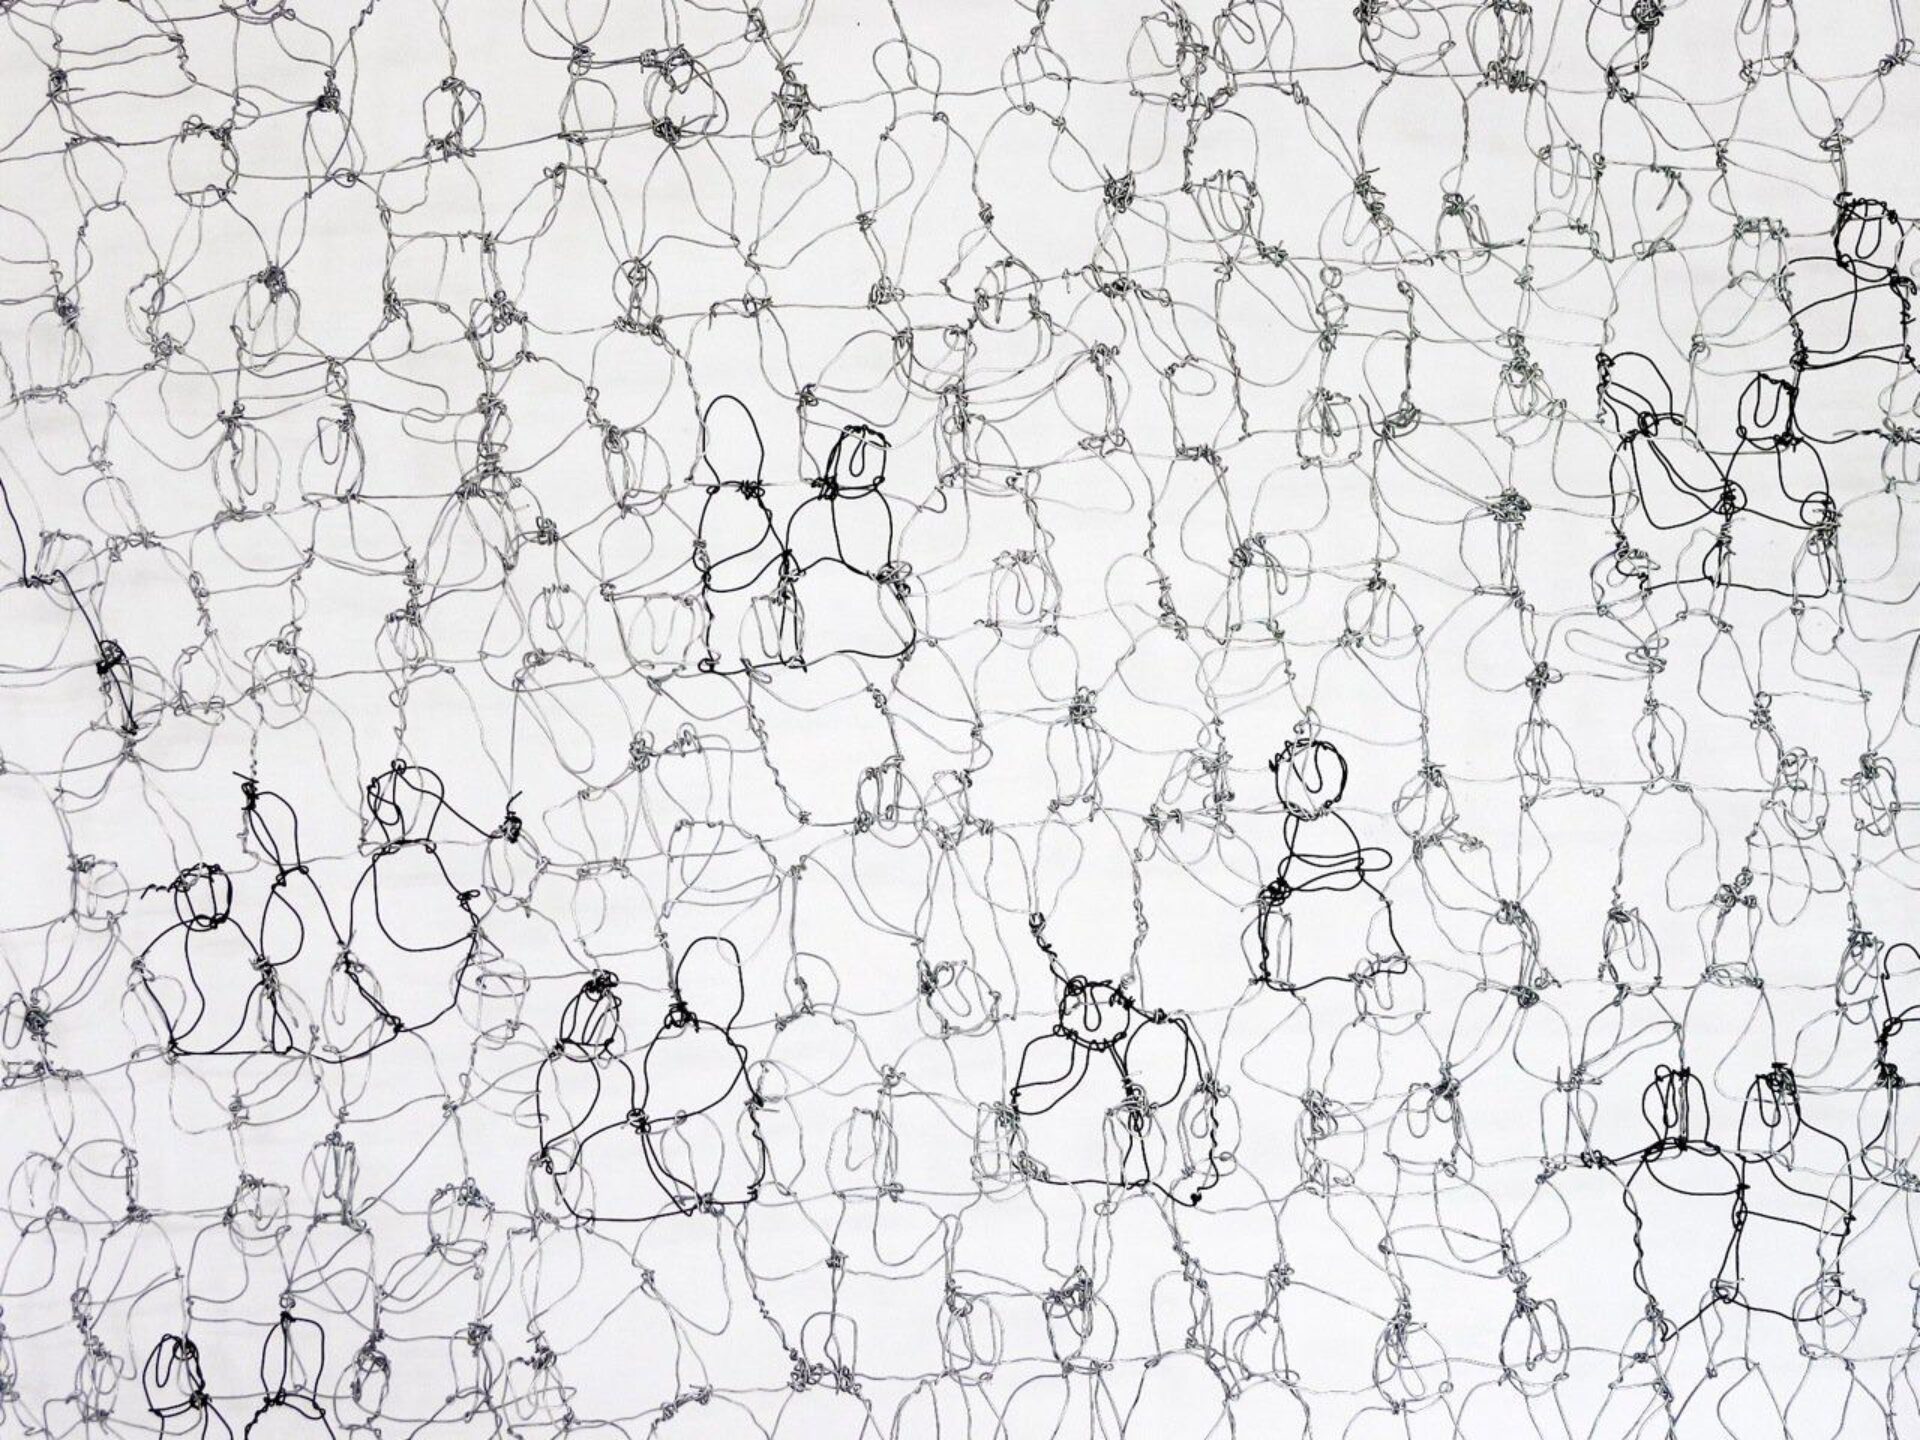 Dan Perjovschi, Wire Drawing, 2014, Detail